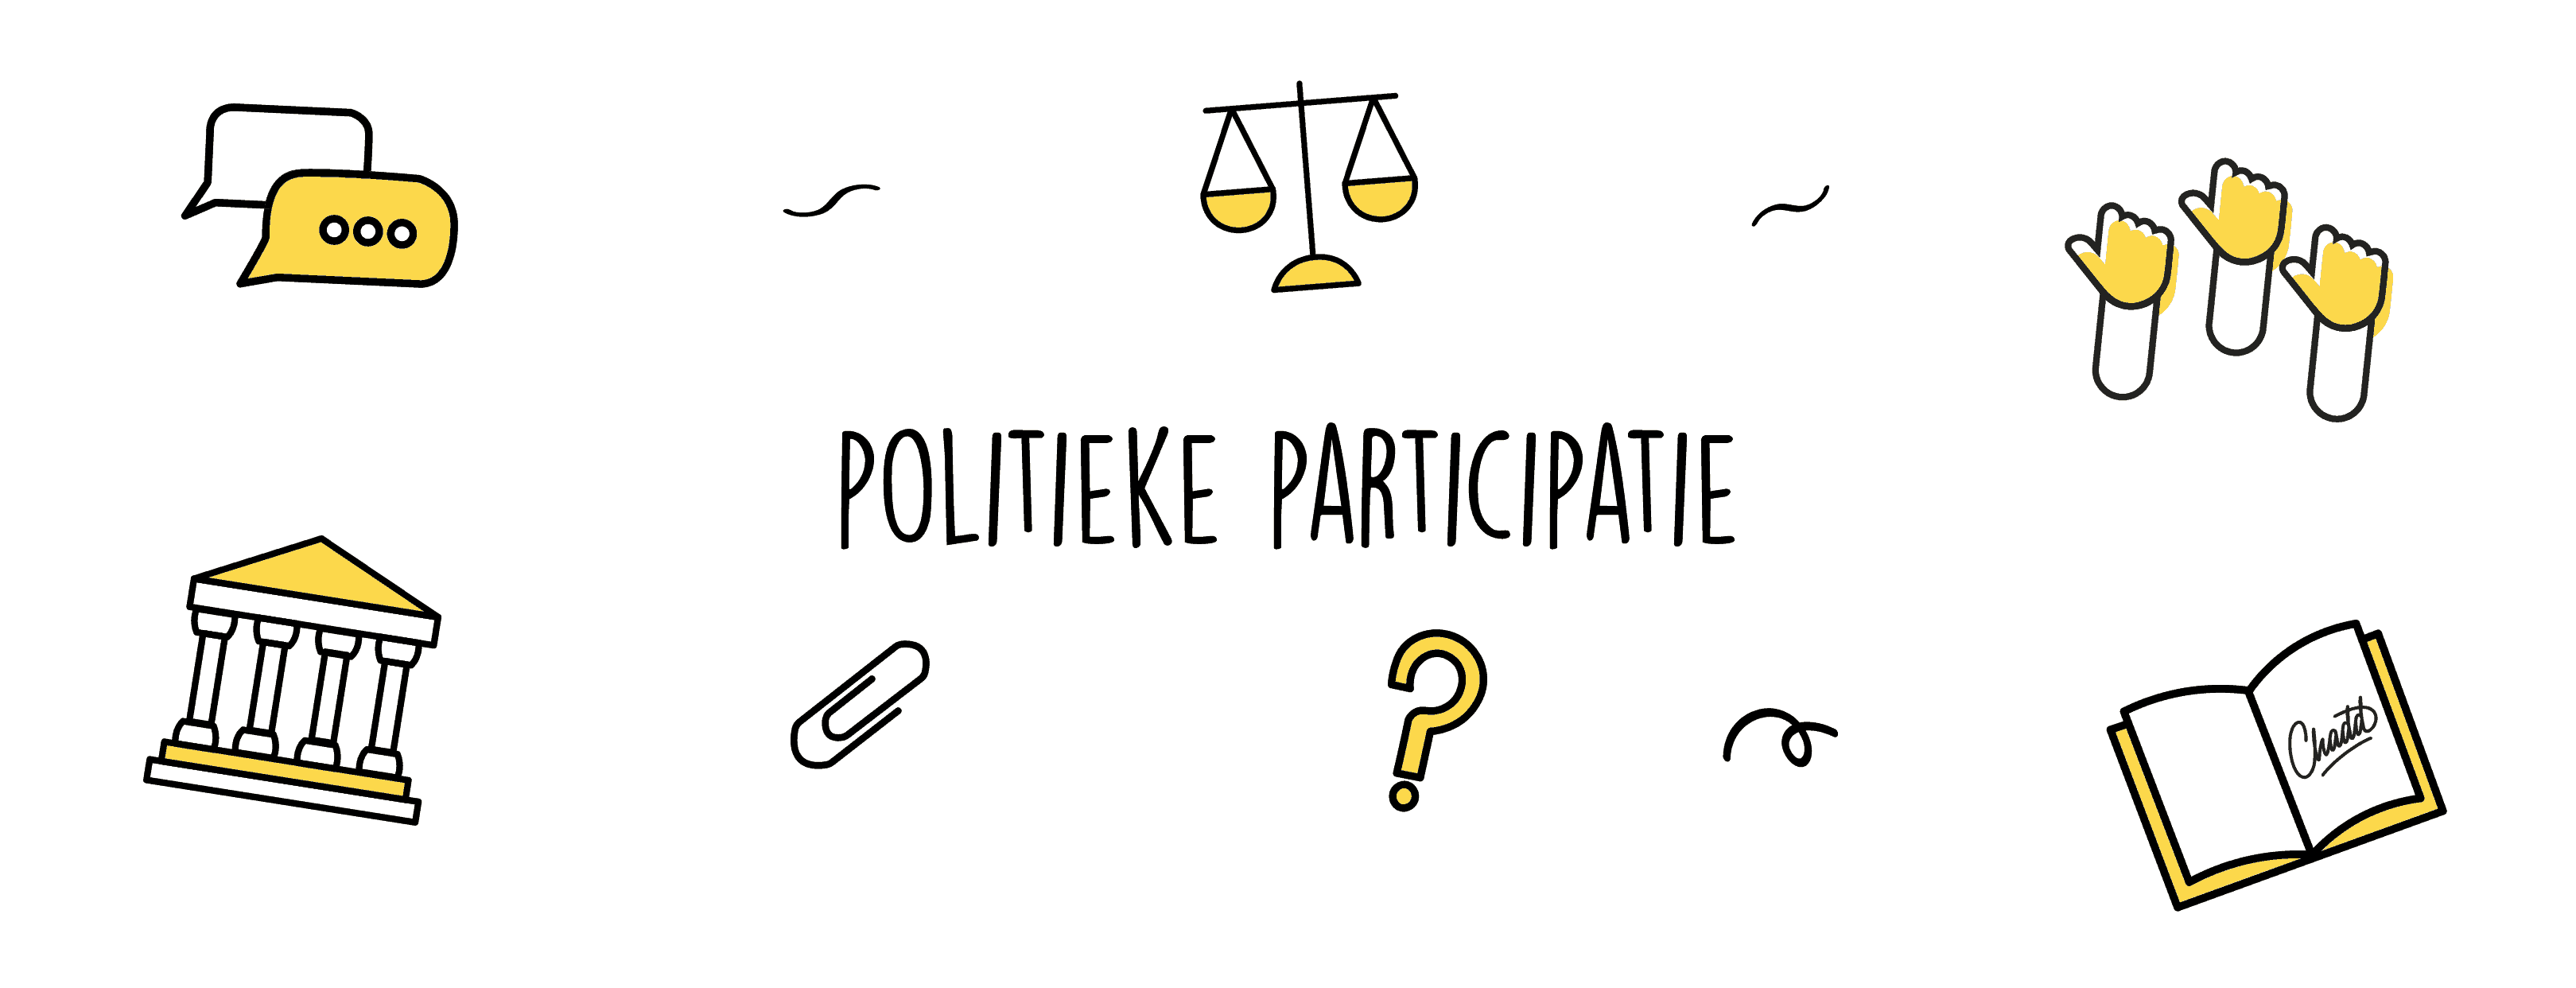 politieke participatie